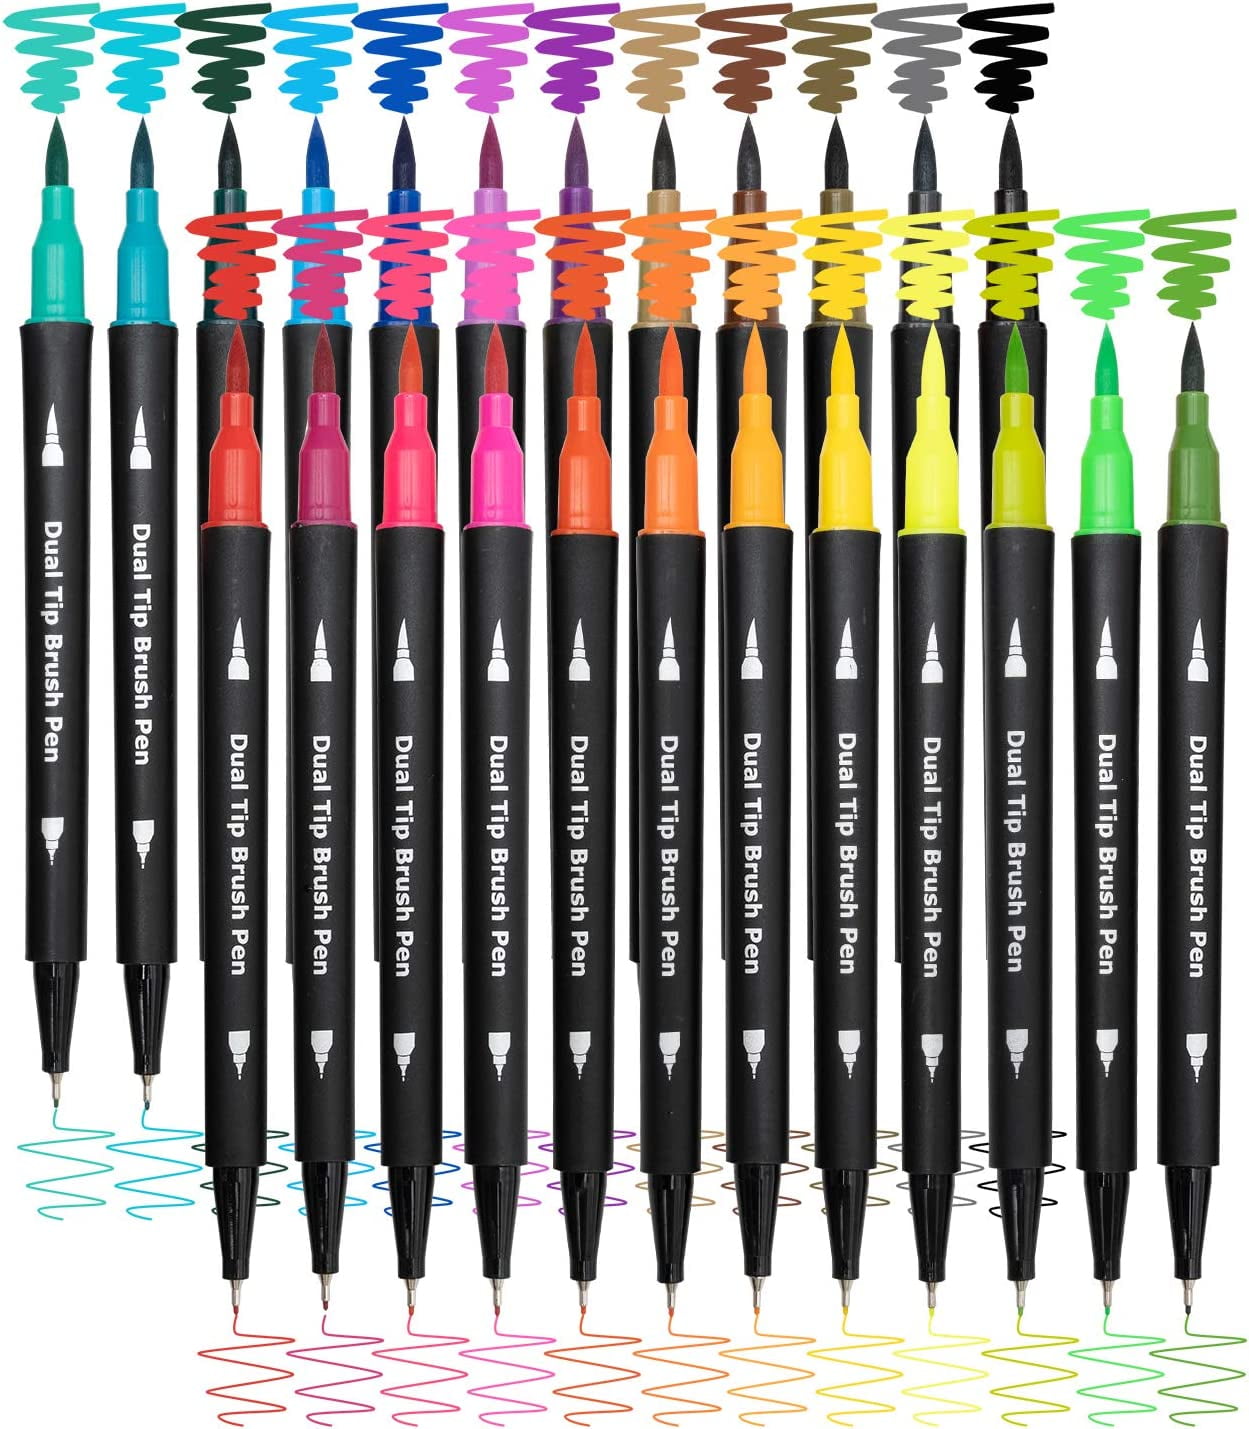 Duslogis Art Kit, 150 Pack Drawing Kits Art Supplies for Kids Girls Boys Teens  Artist, Beginners Art Set,Sketch Pad,Oil Pastels,Crayons,Colored Pencils 